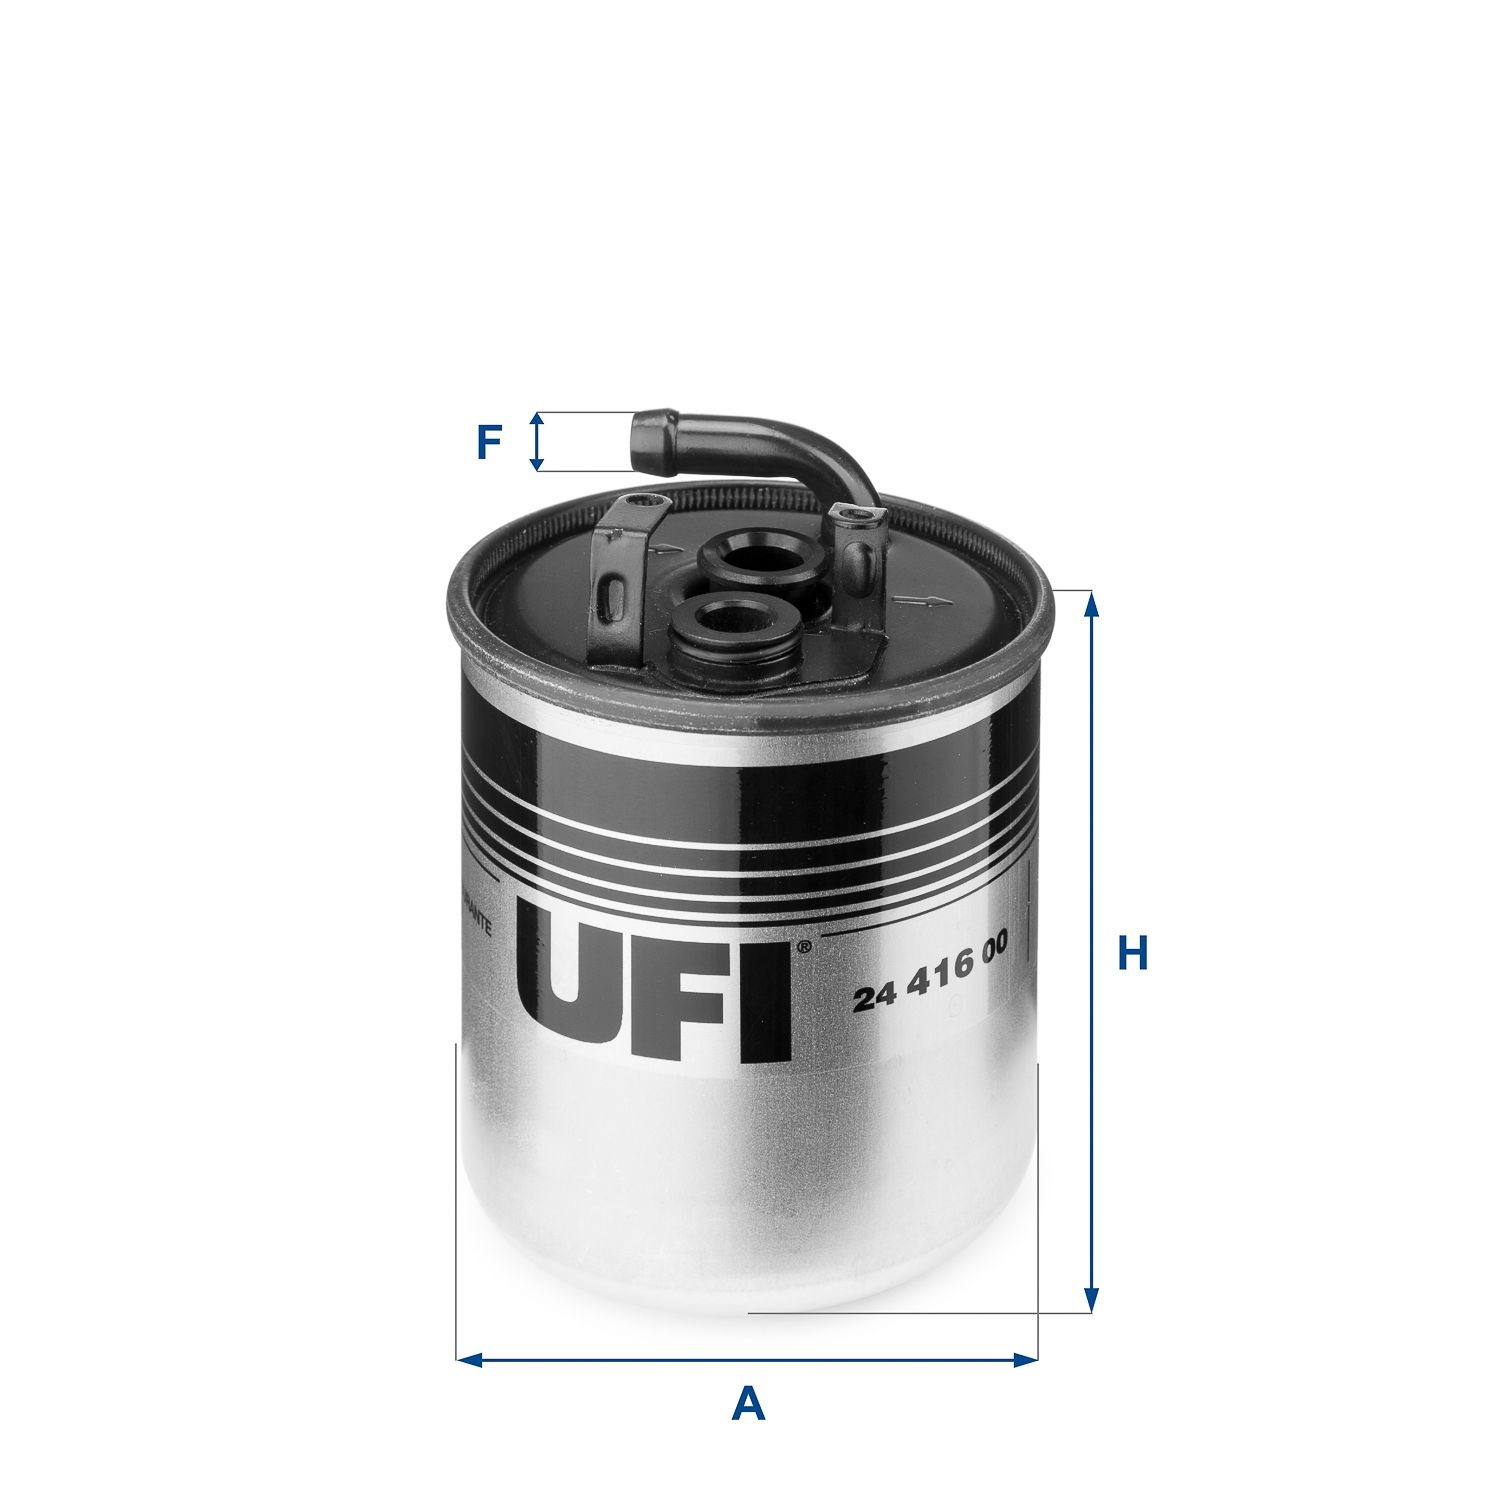 UFI 24.416.00 Fuel filter A611 090 0852